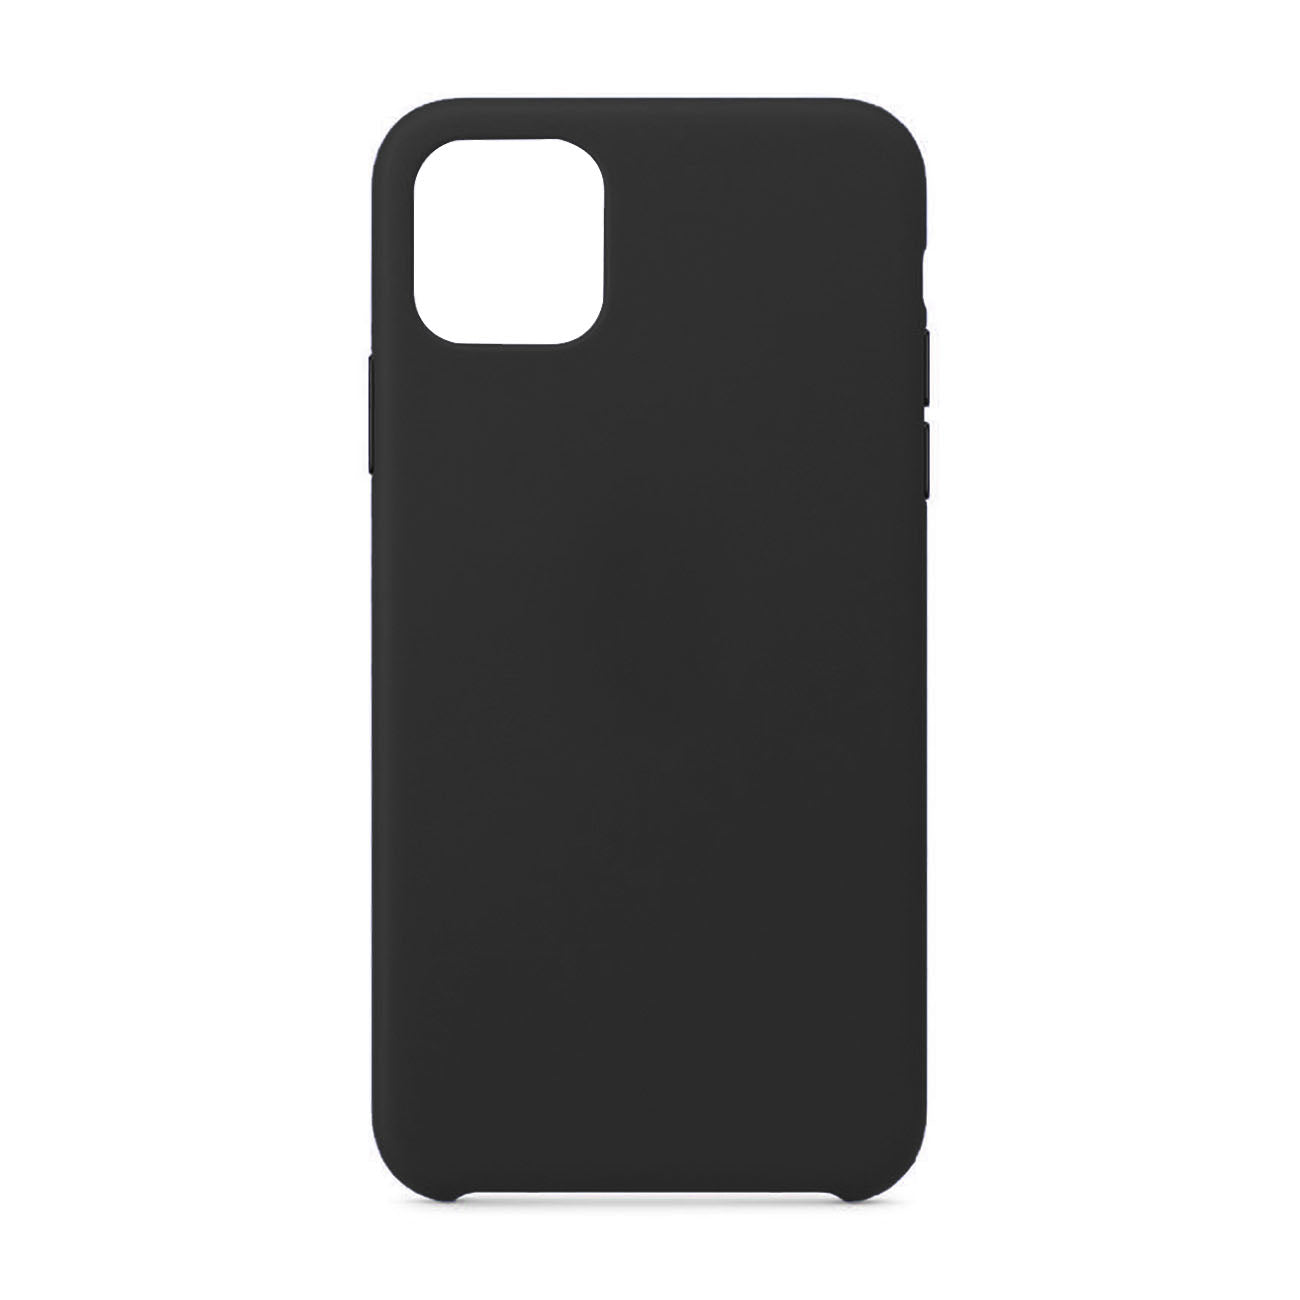 Apple iPhone 11 Pro Gummy Cases In Black